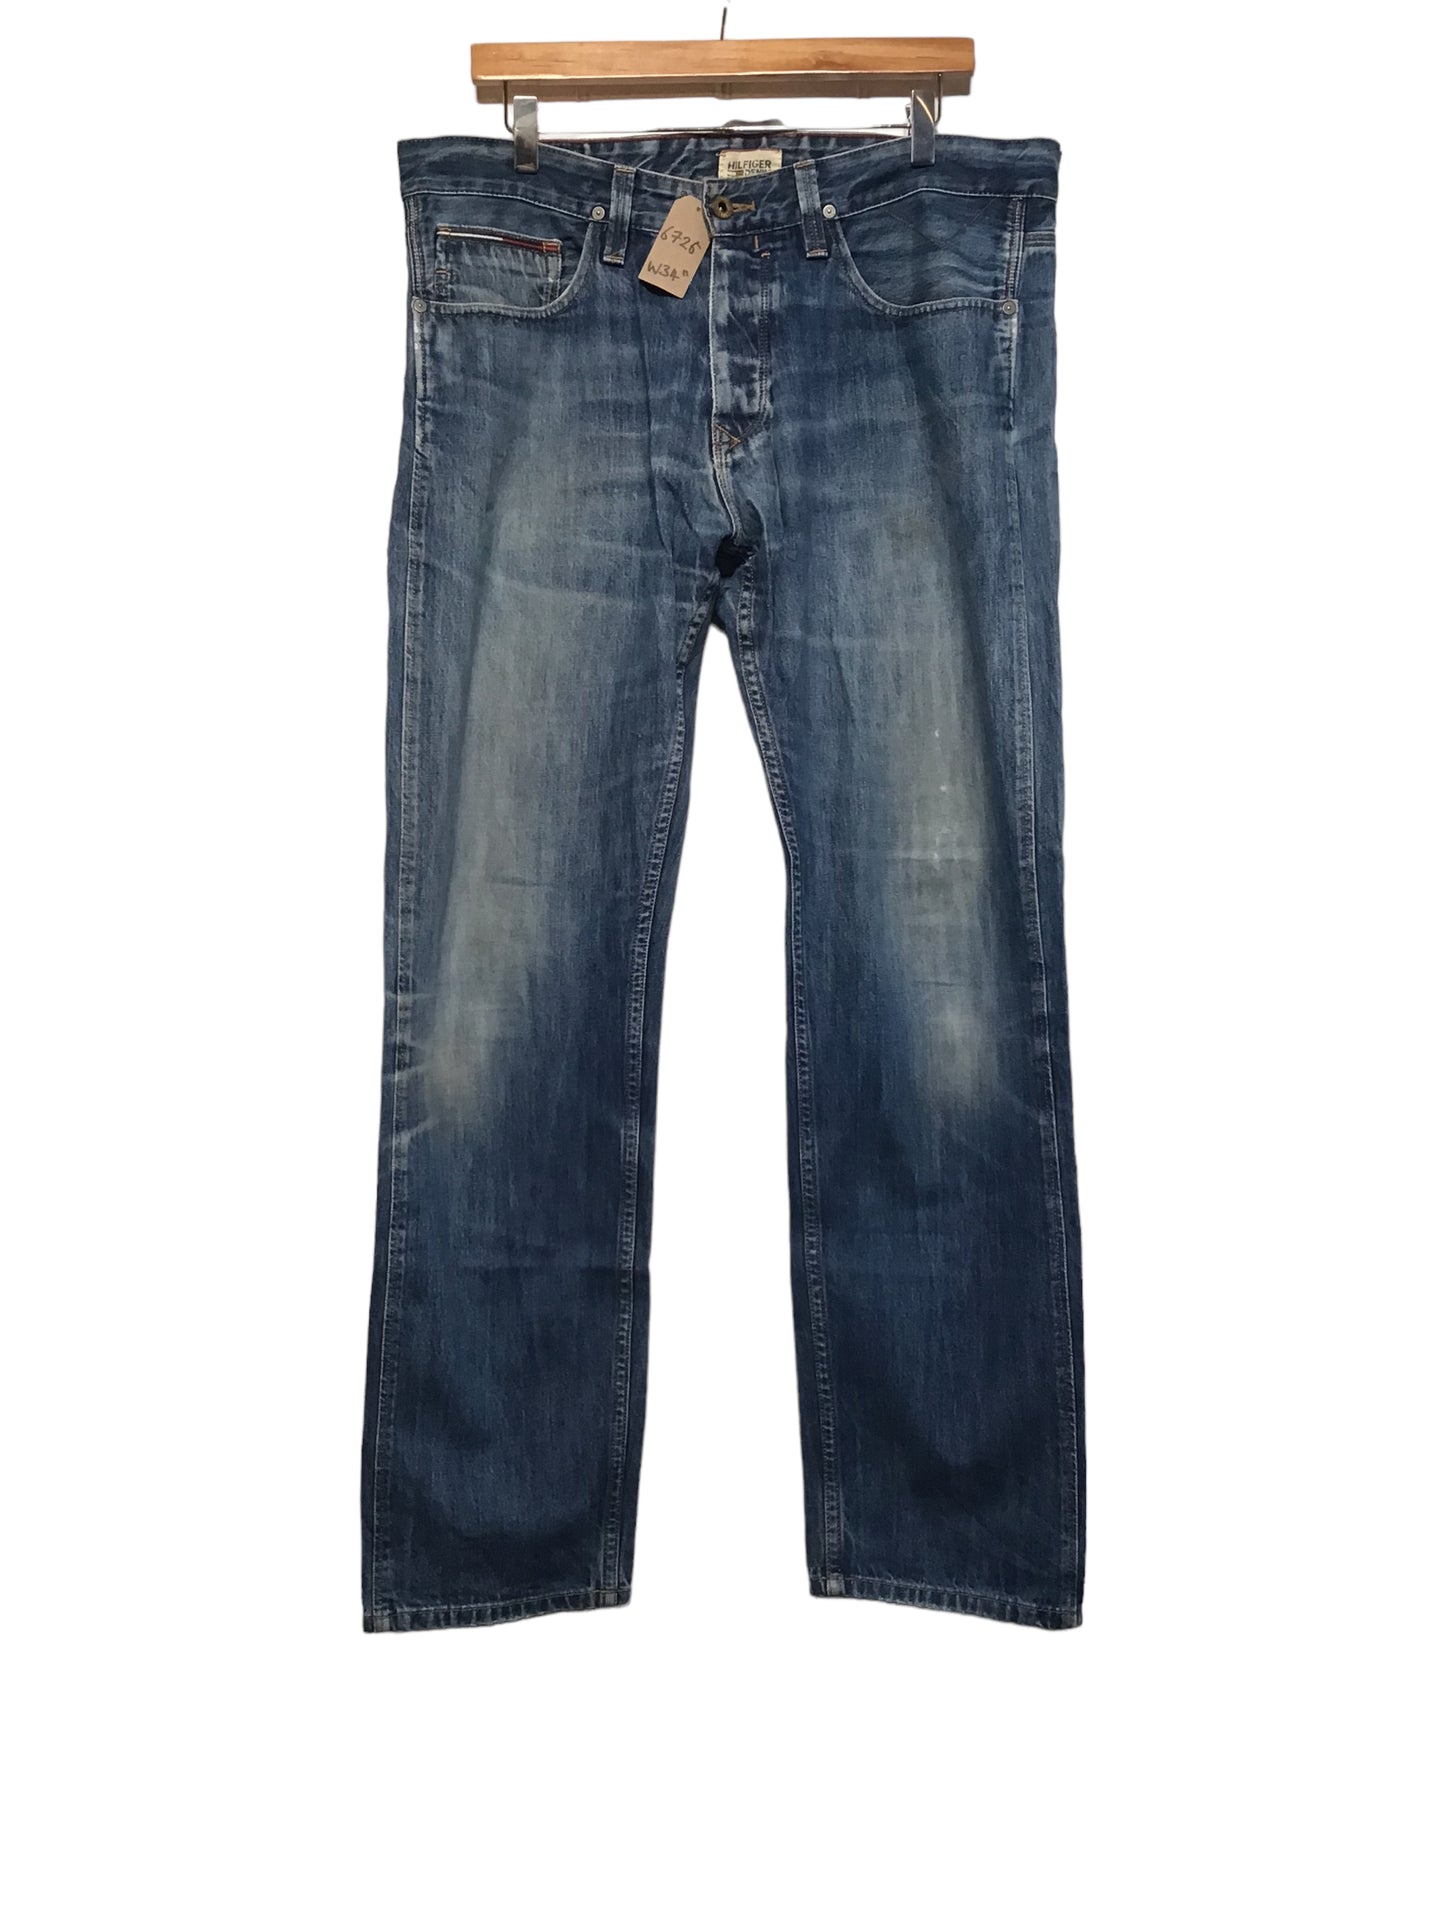 Tommy Hilfiger Jeans (34x31)